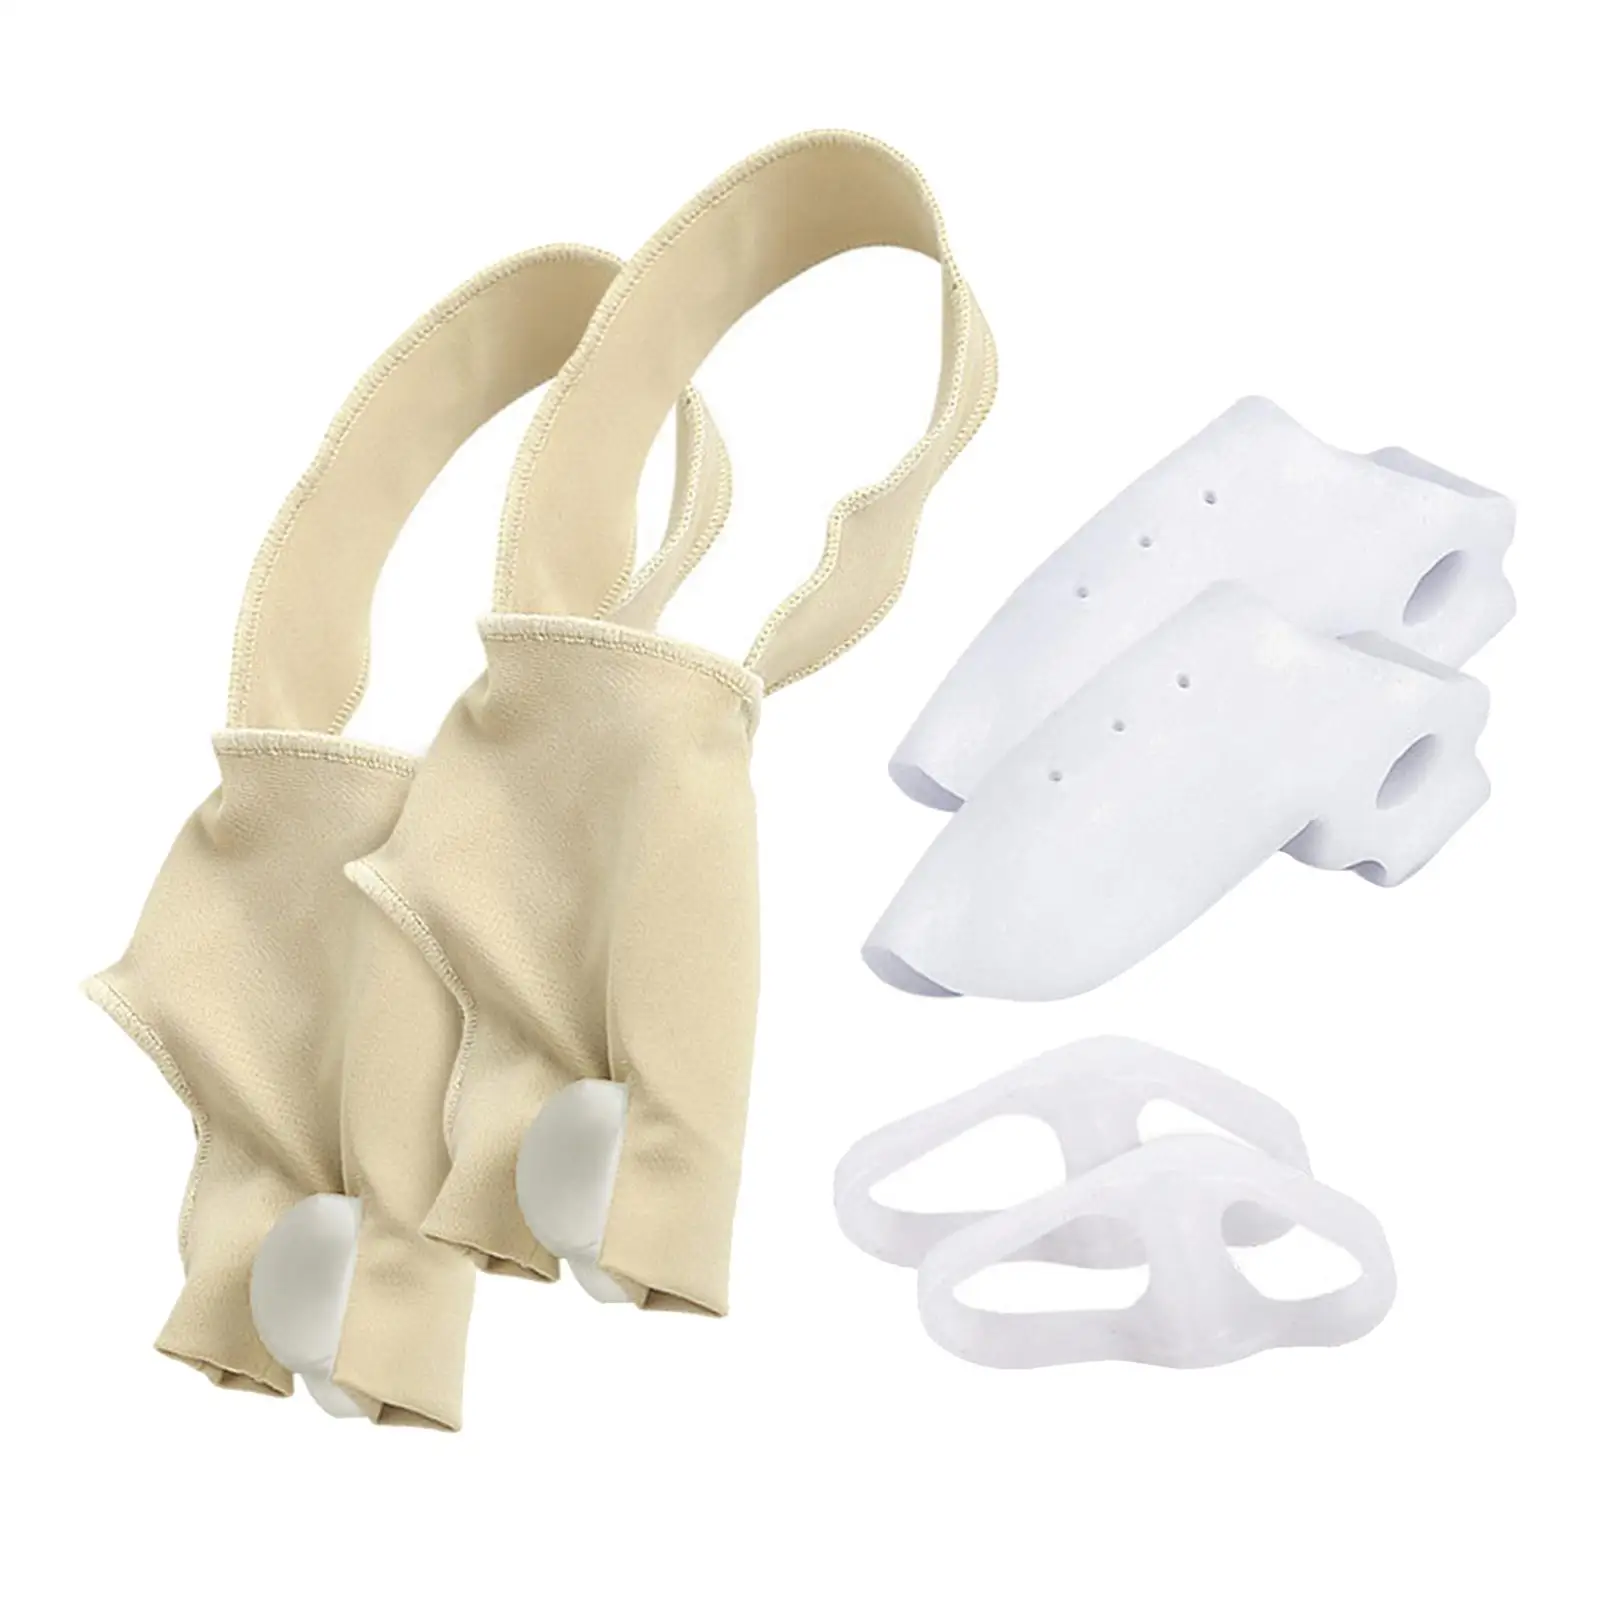 Bunion Corrector Kit Anti Abrasion Bunion Protector Toe Spreader Toe Stretcher Toe Separator Toe Guard Bunion Pads Sleeves Brace